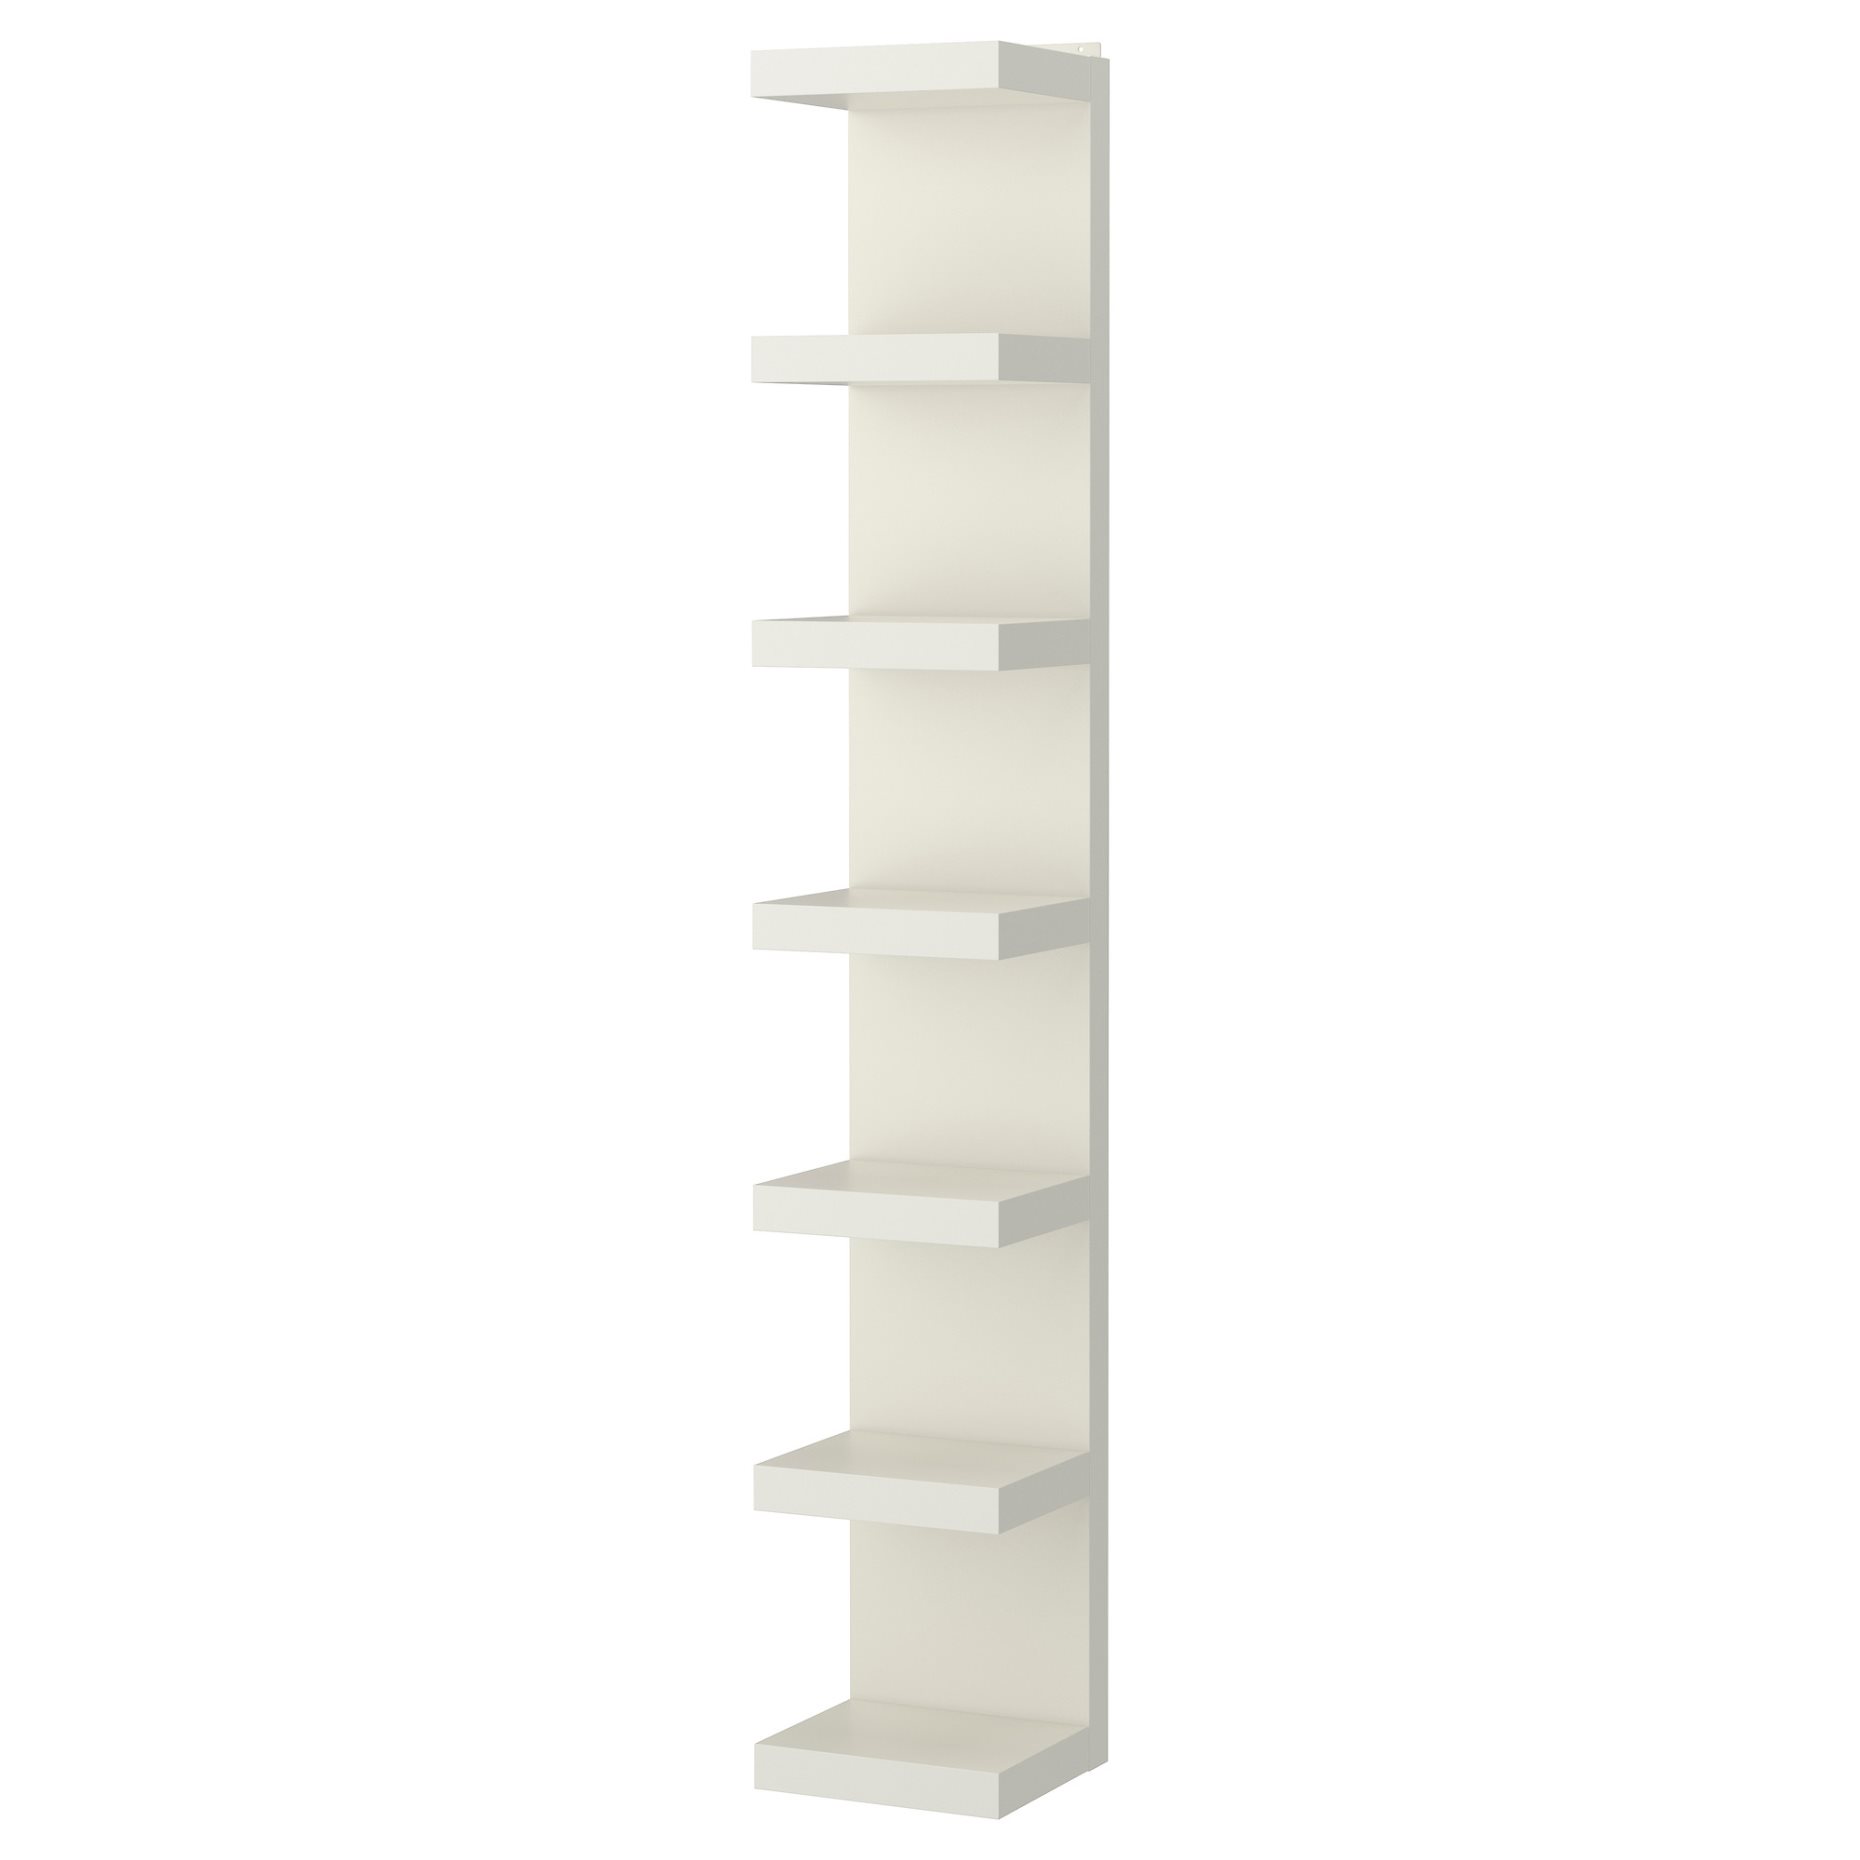 LACK, wall shelf unit, 602.821.86